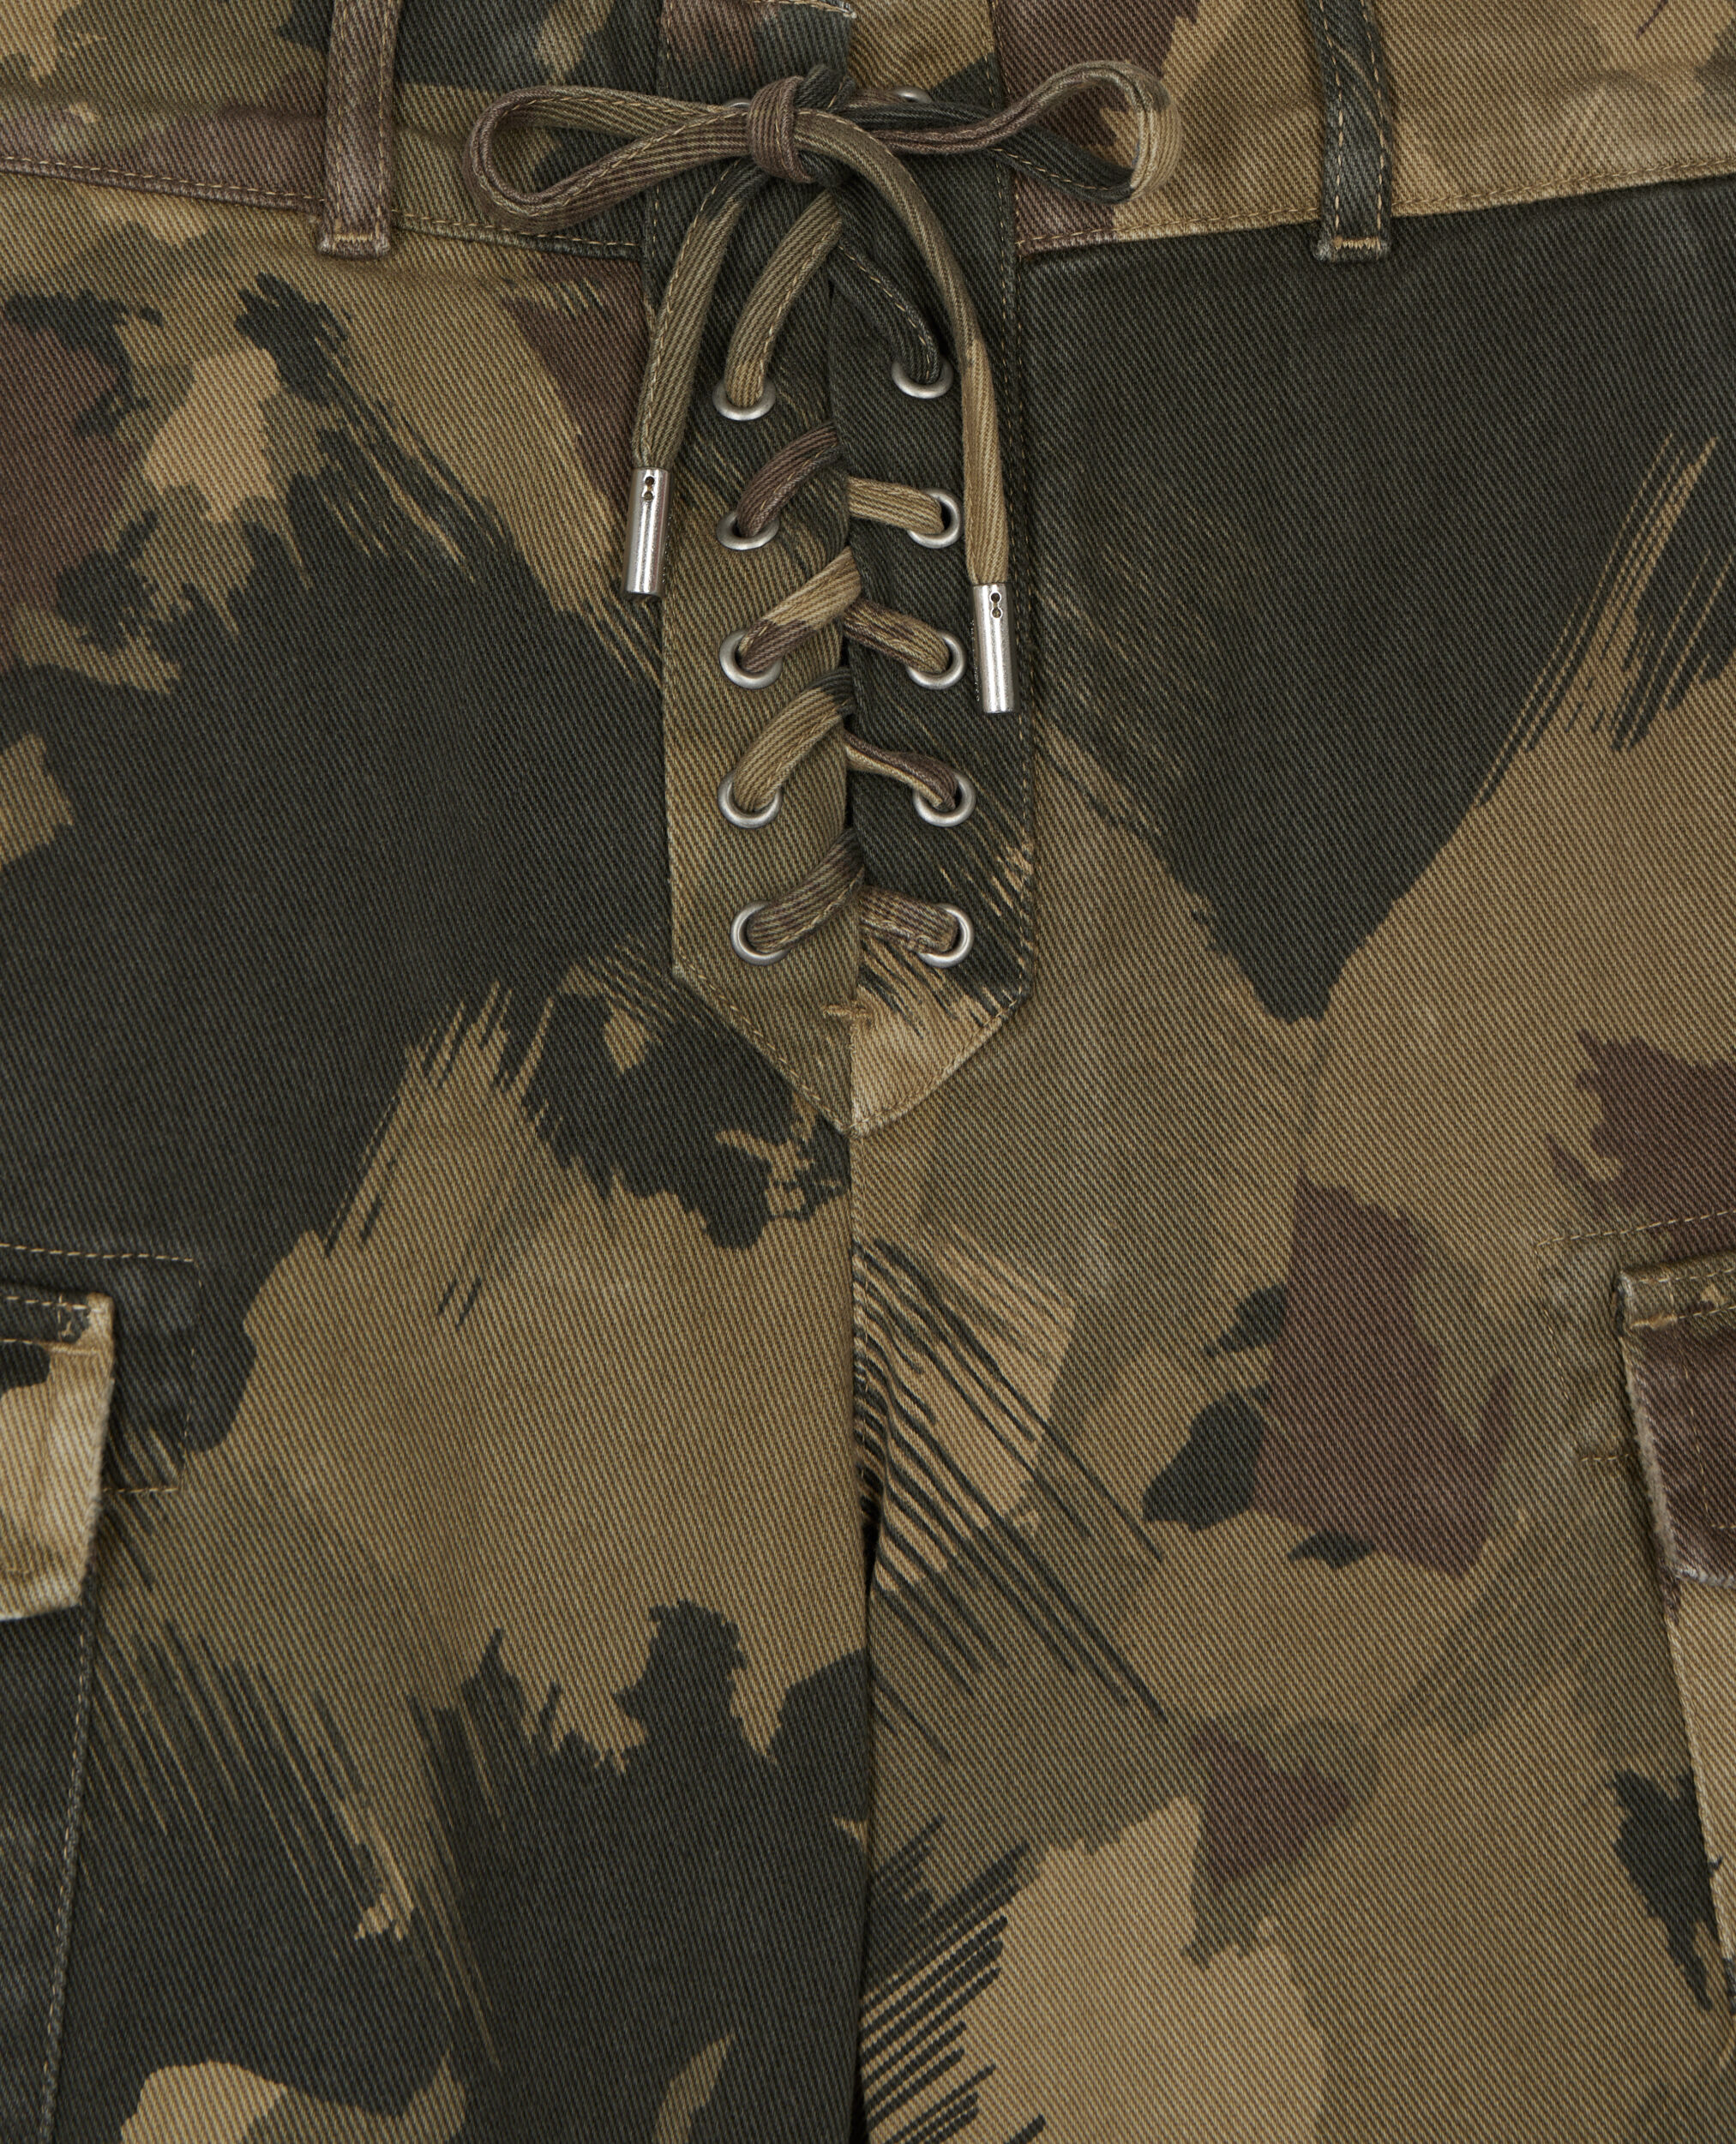 Camouflage denim shorts, CAMOUFLAGE, hi-res image number null